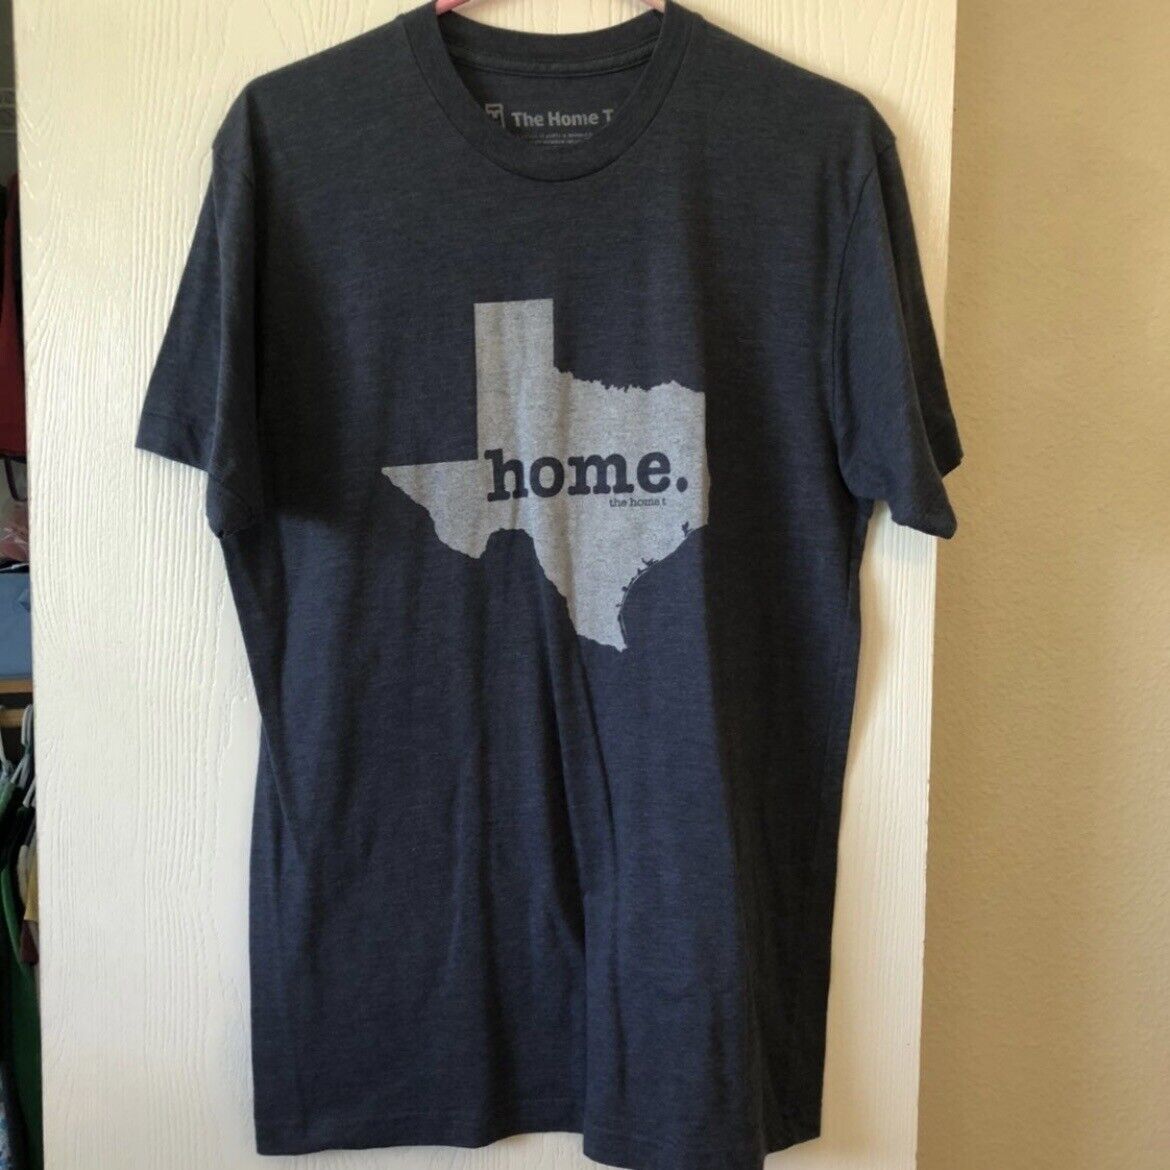 The Home T - Texas - Medium - image 1